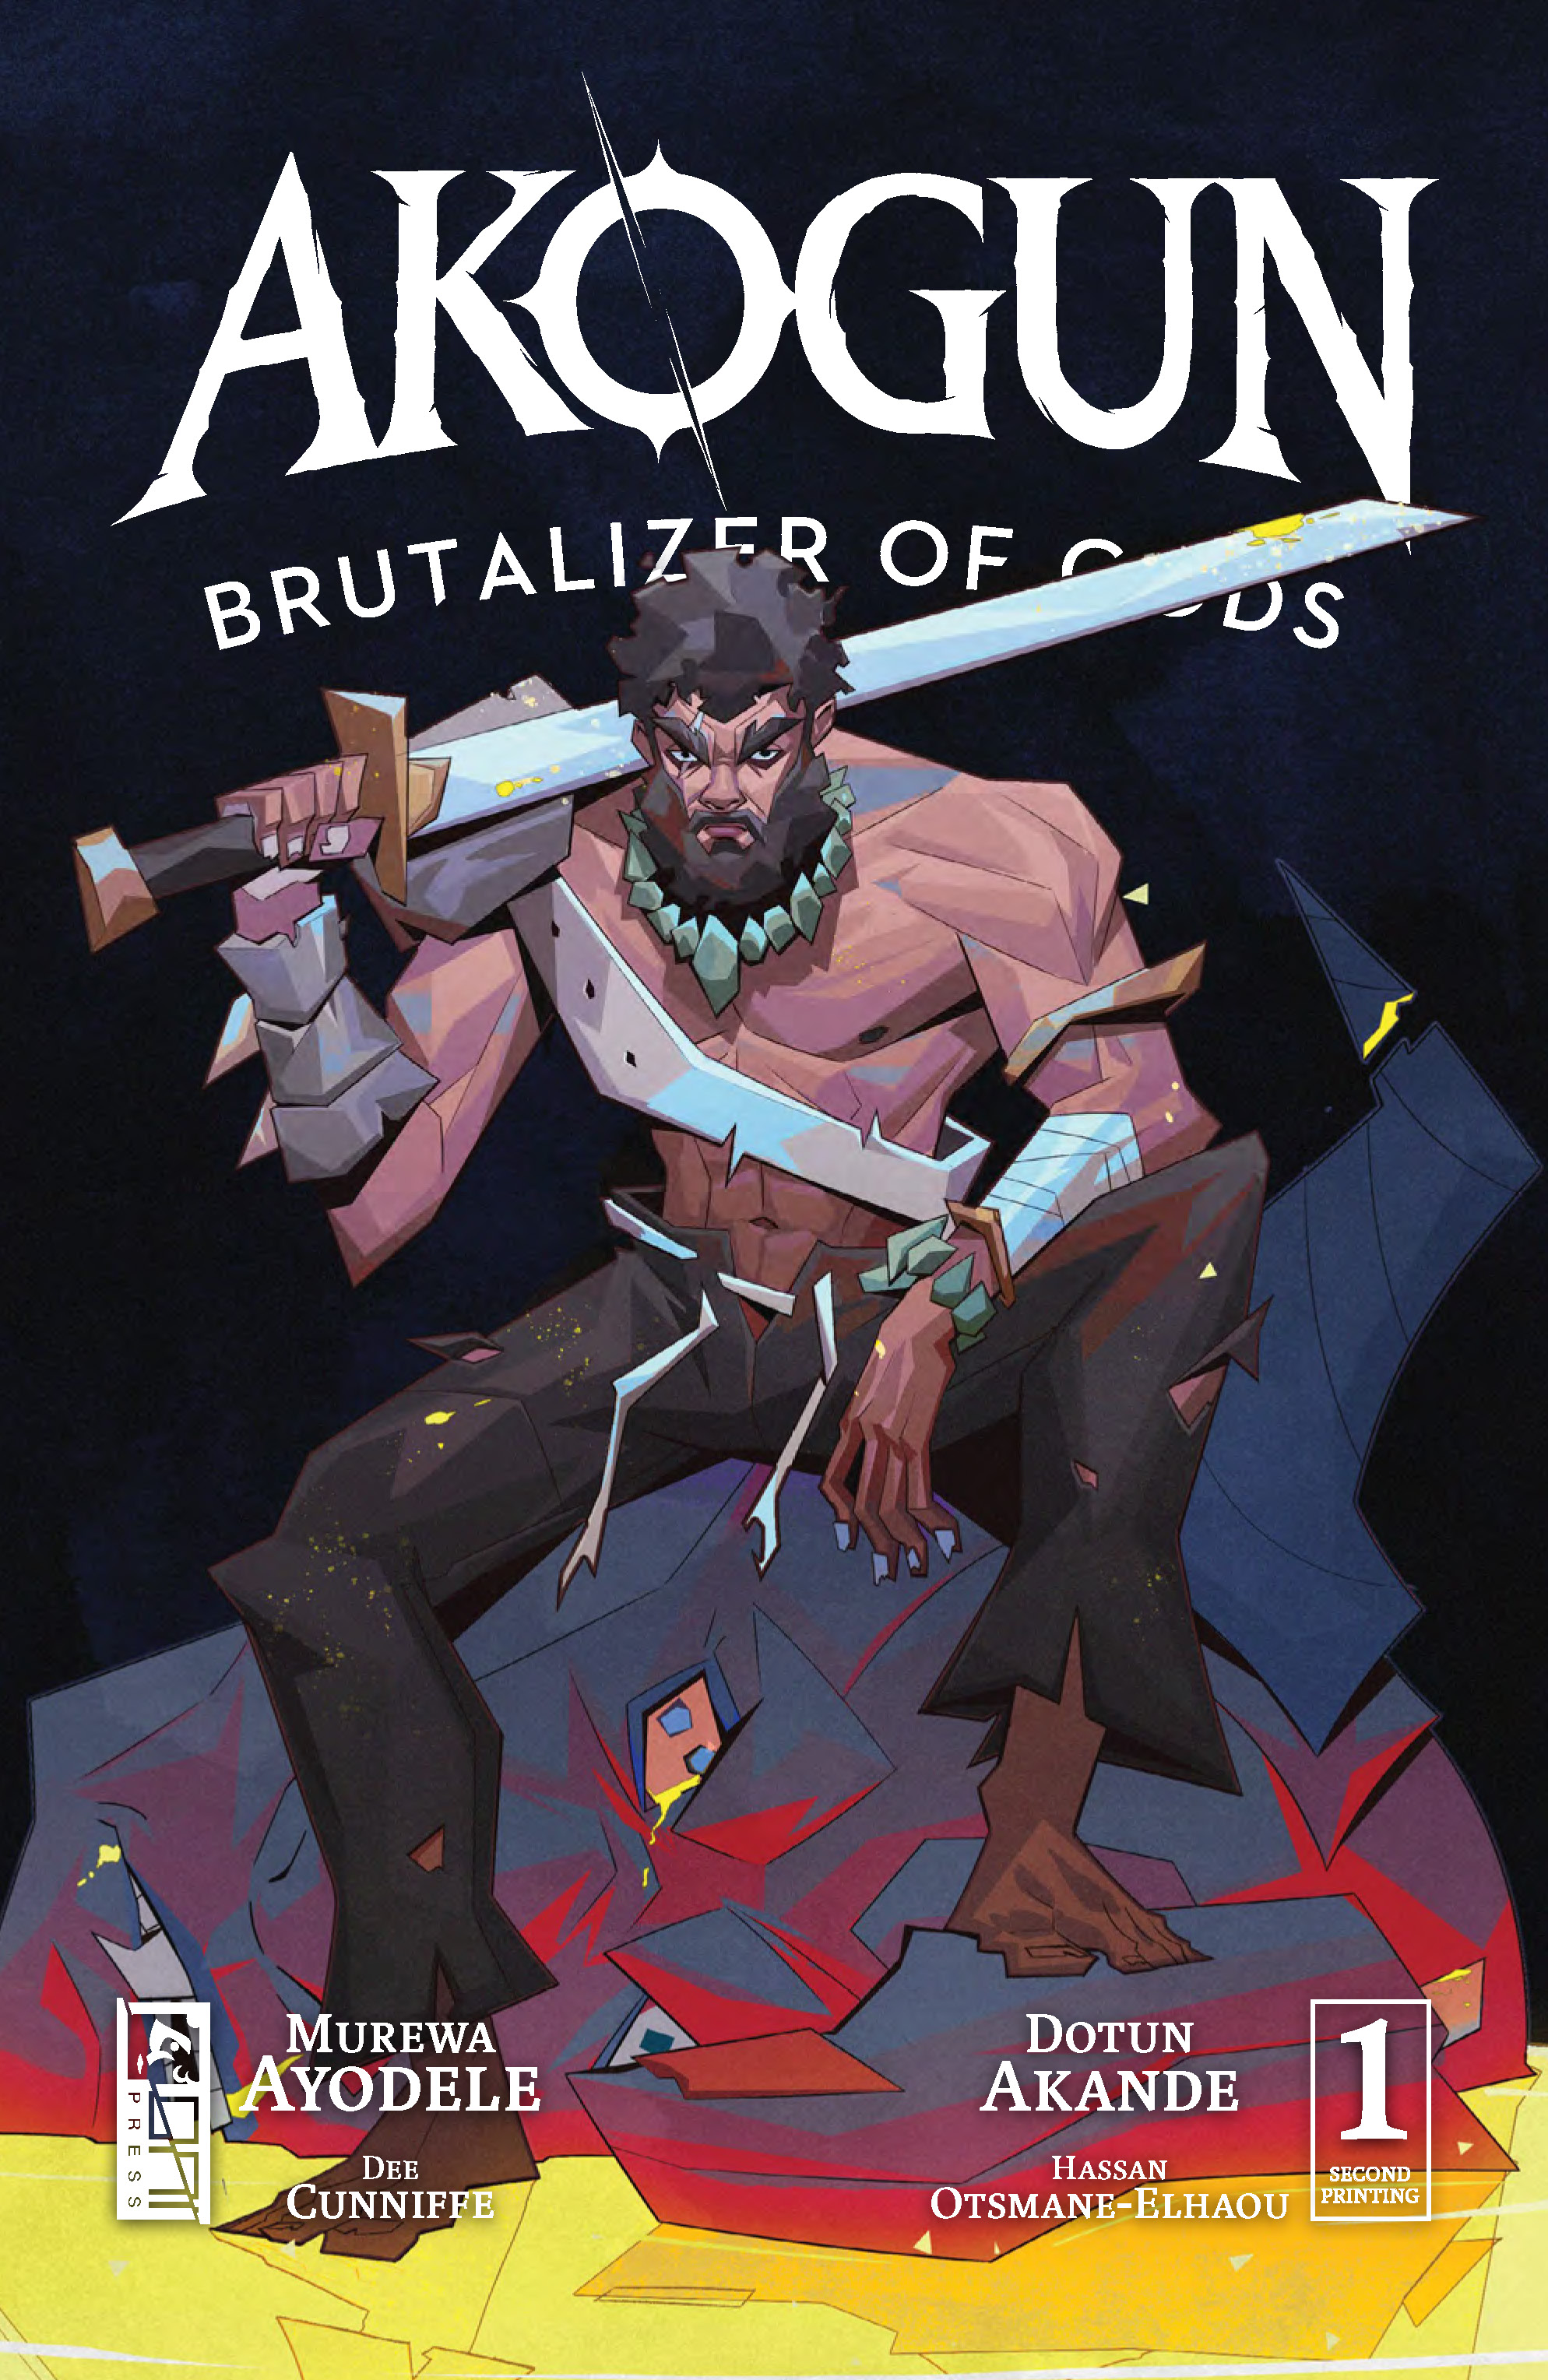 Akogun Brutalizer of Gods #1 2nd Printing